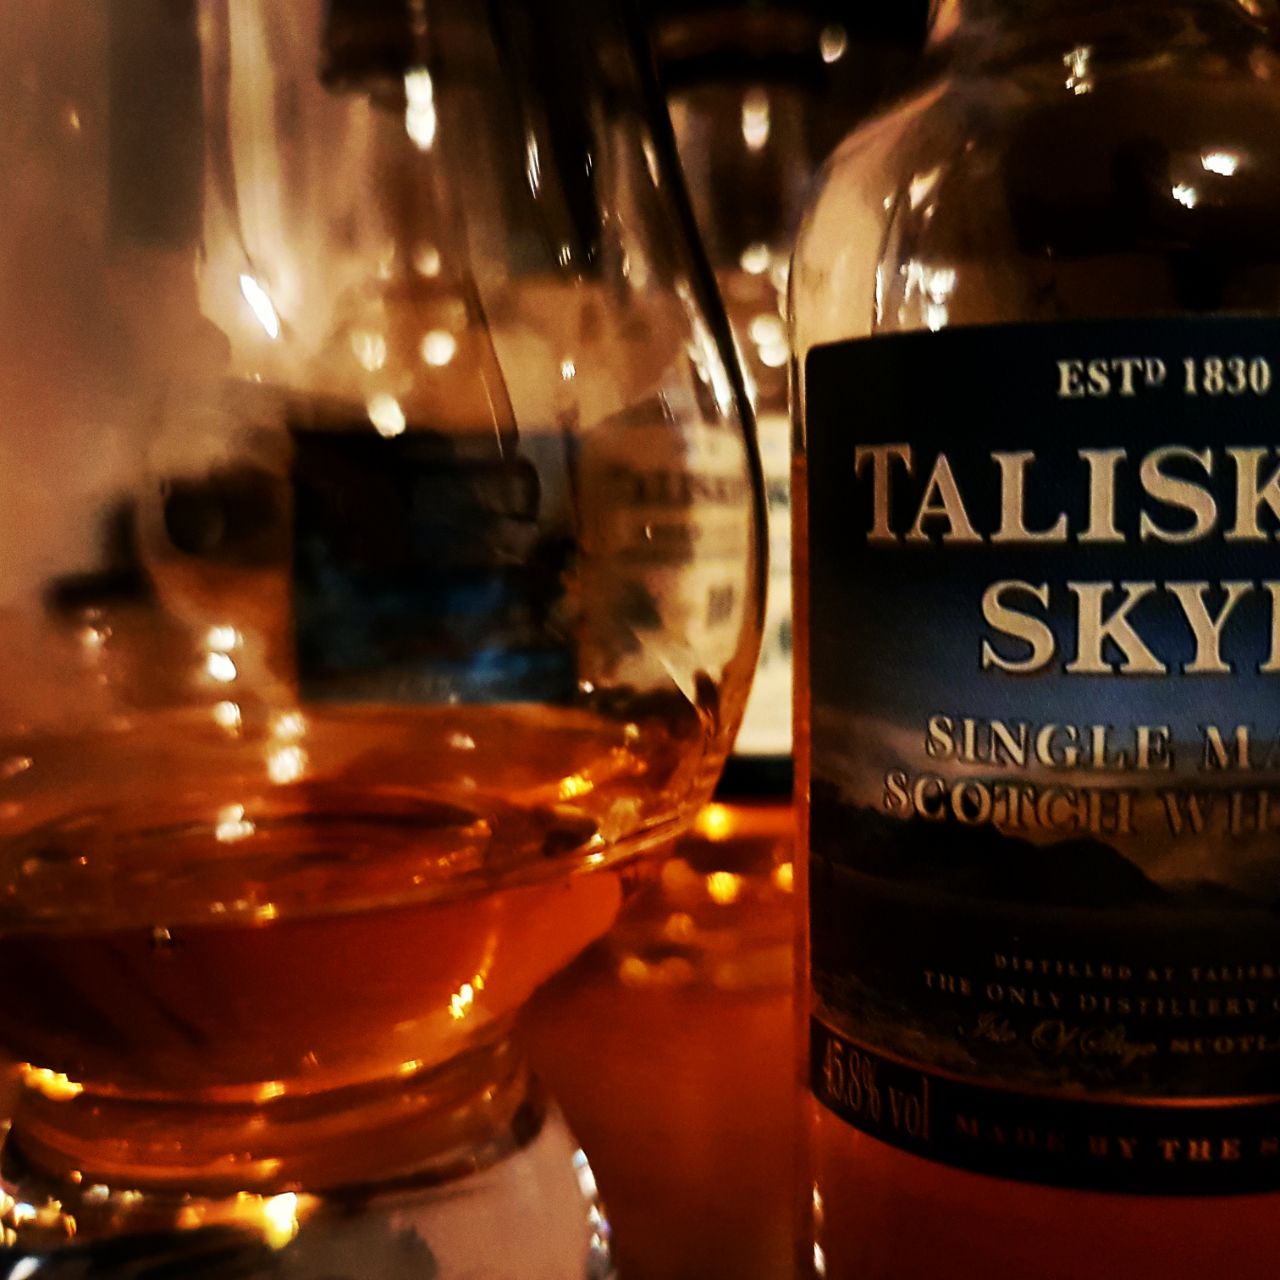 Talisker Skye Islay Single Malt Scotch Whisky